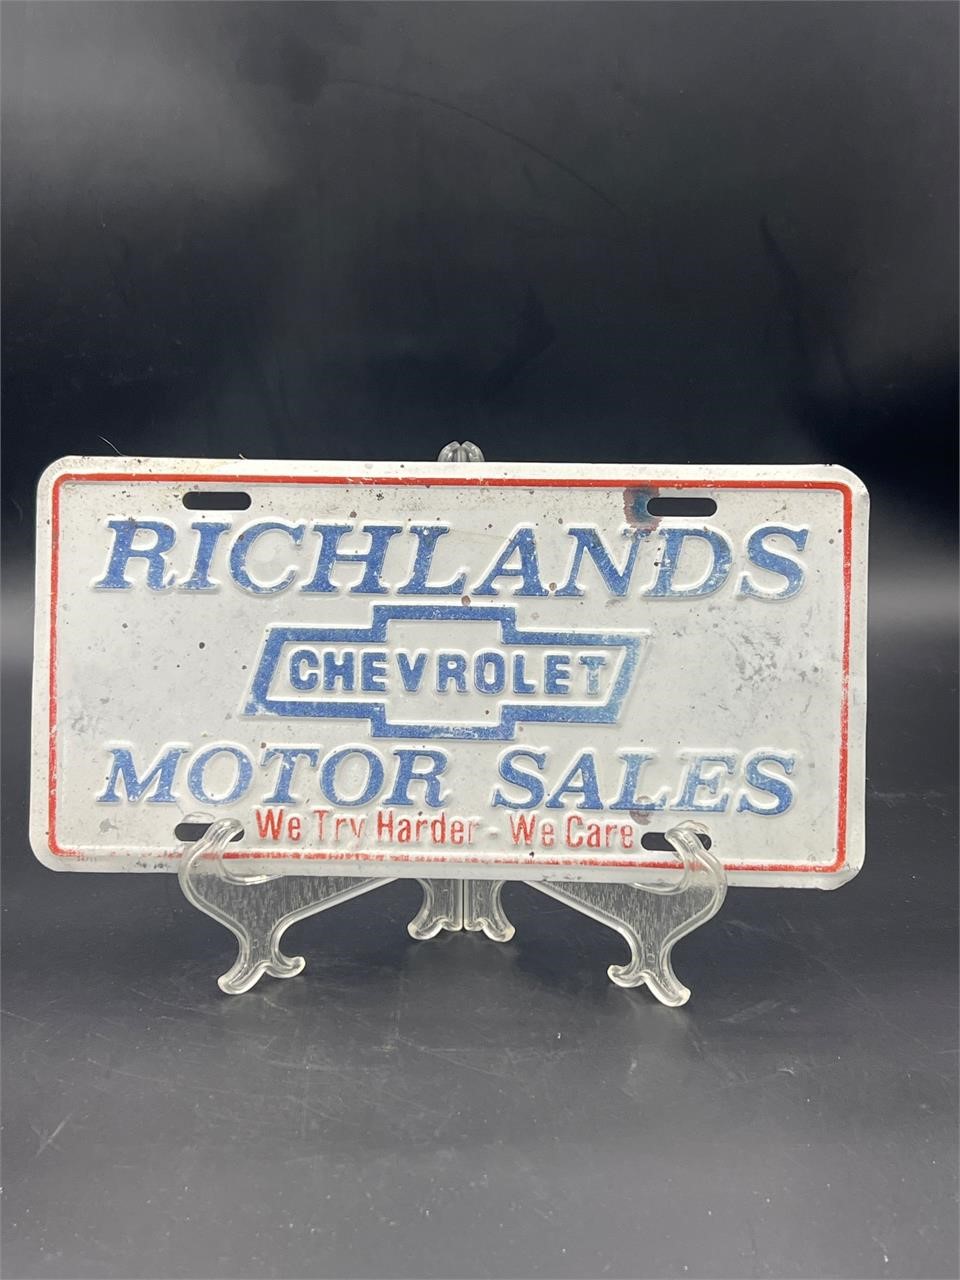 Richlands Chevrolet Motor Sales license tag